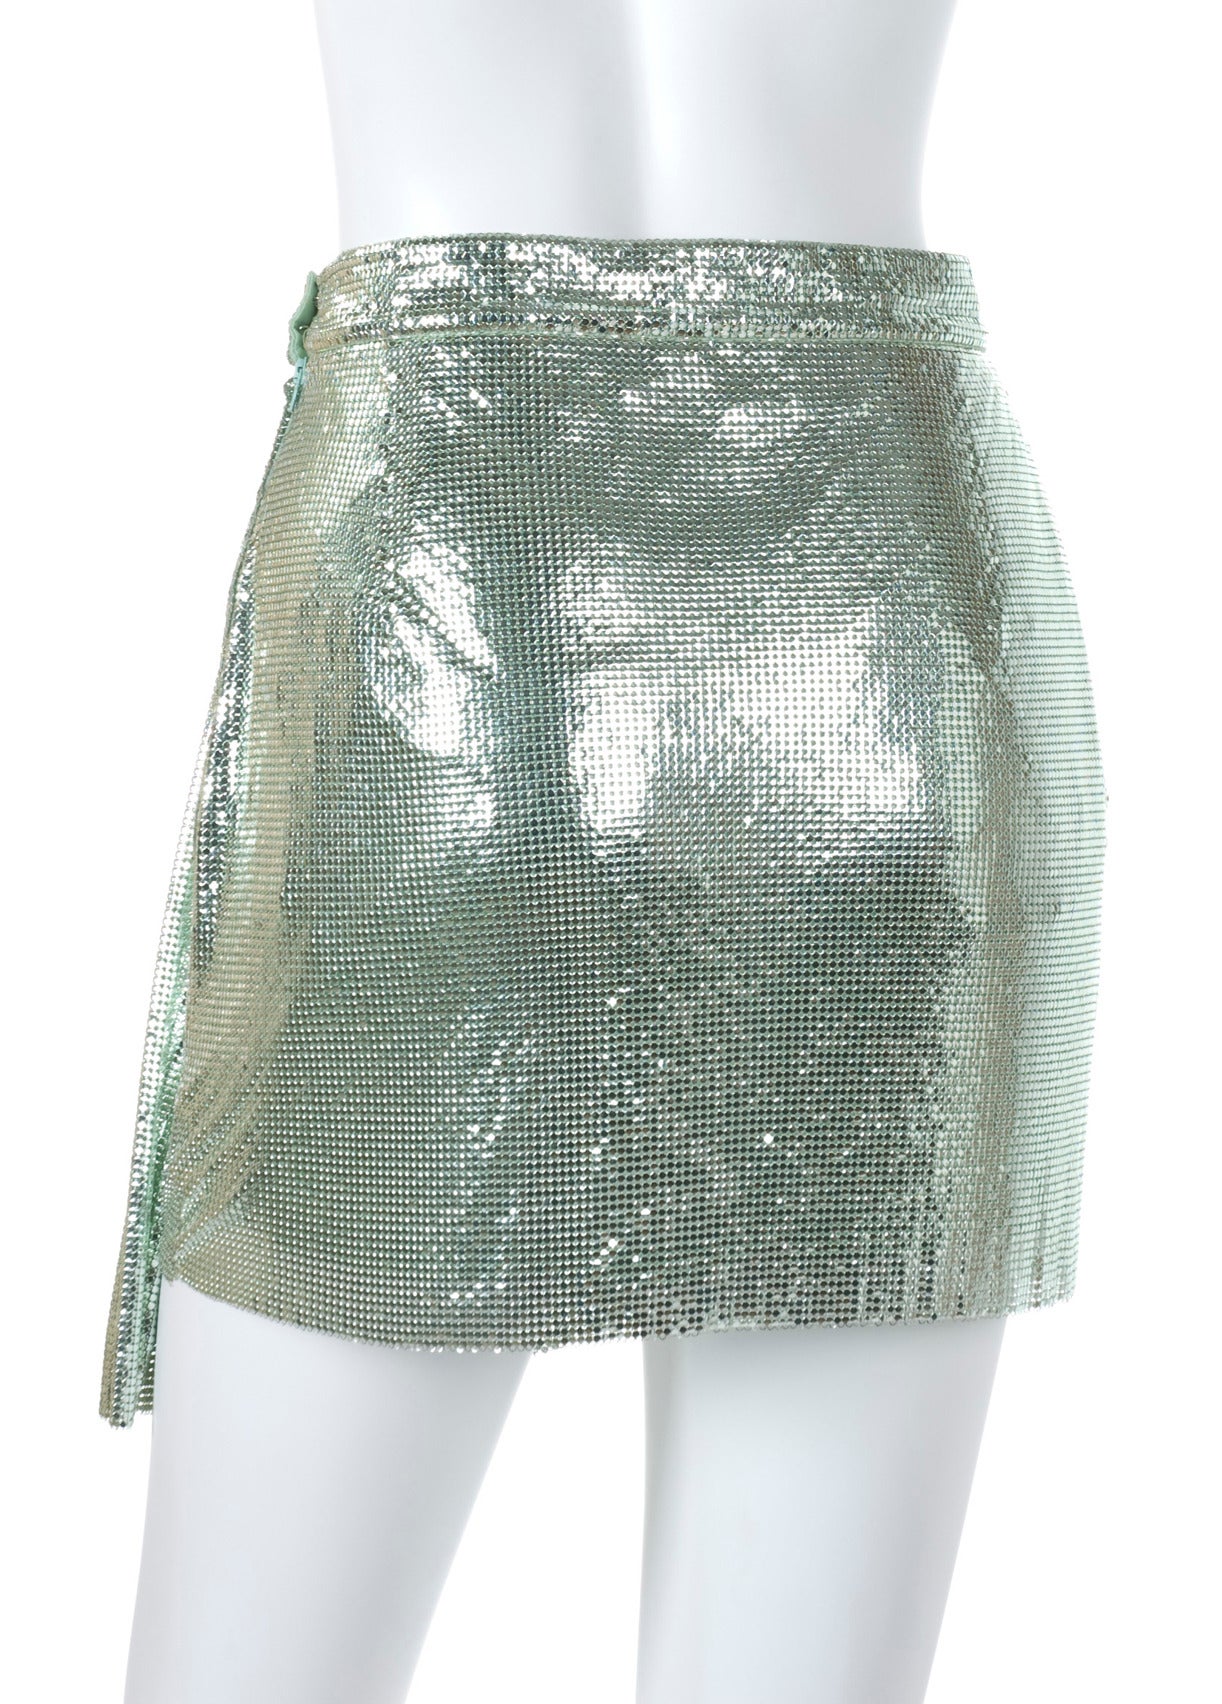 1994 Gianni Versace Couture Oroton Metal Mesh Skirt 3